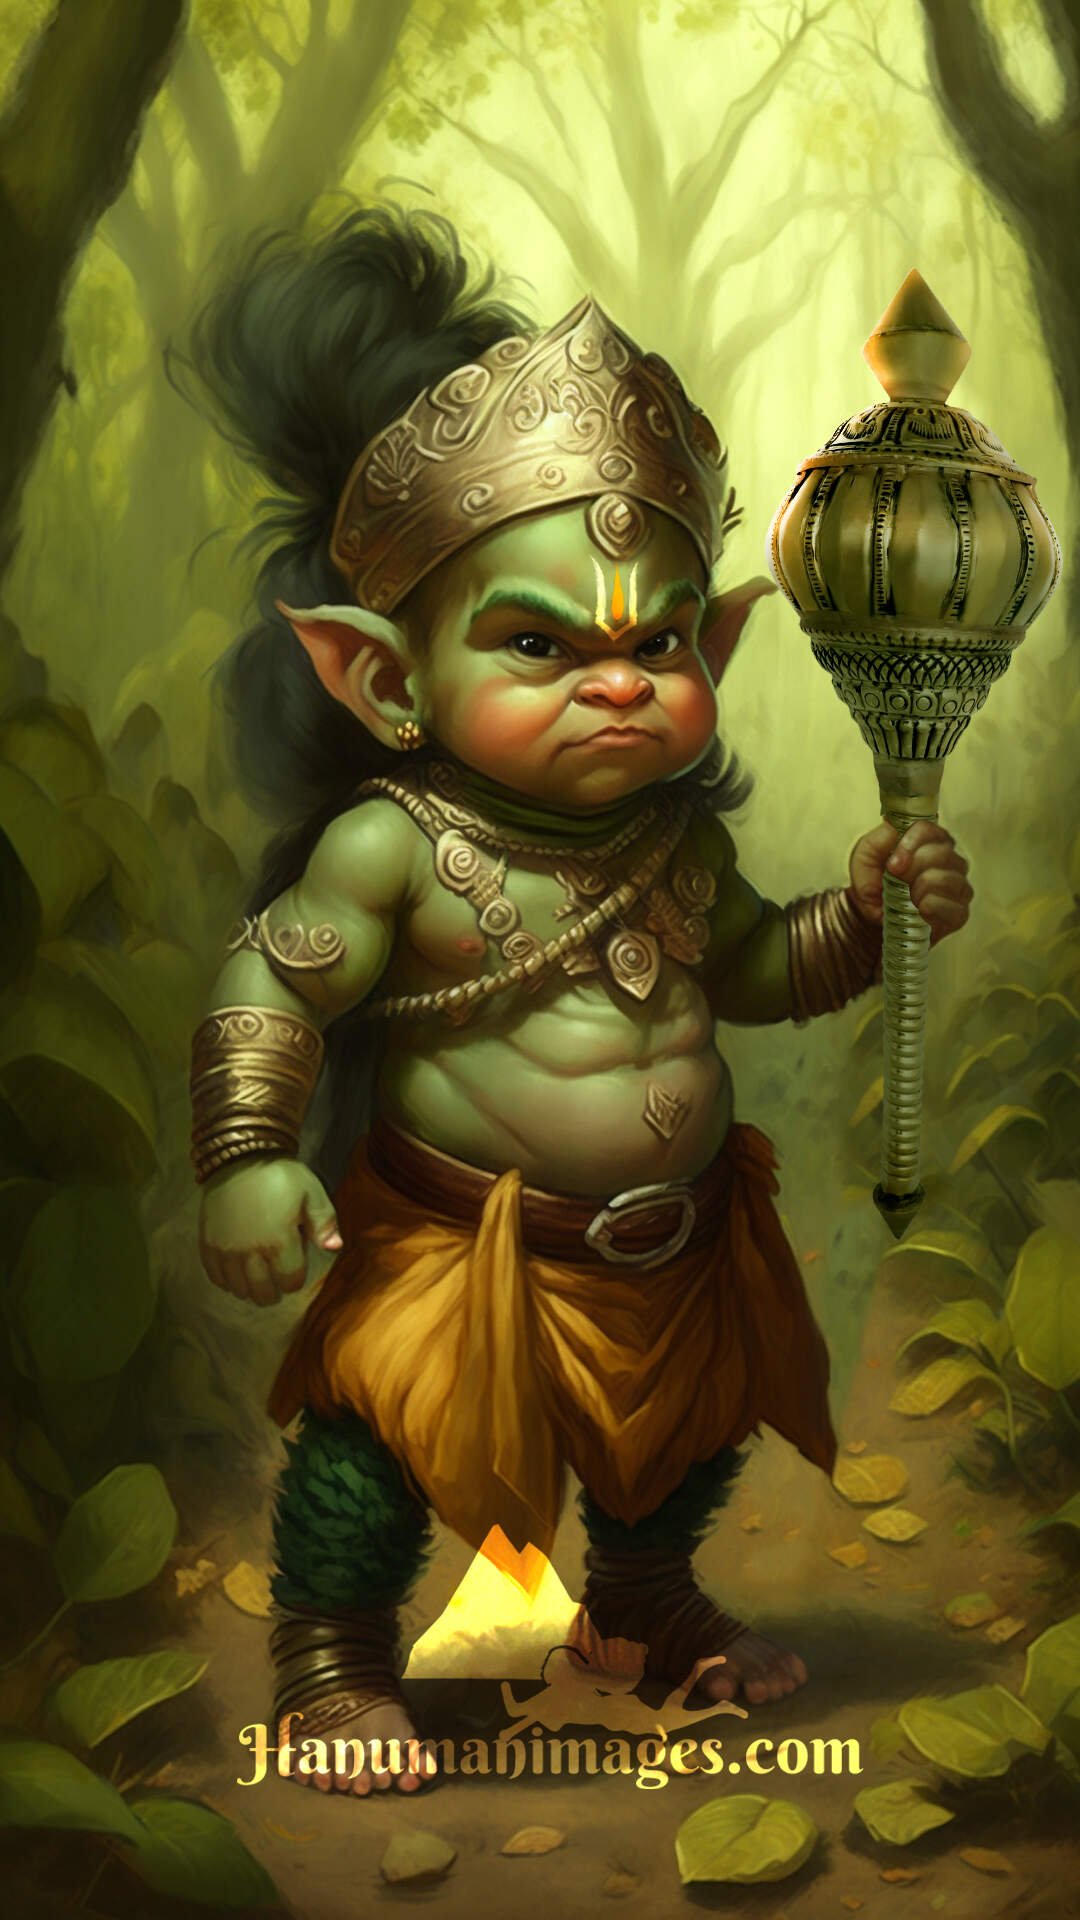 1080p cute hanuman image 3d | Hanuman images